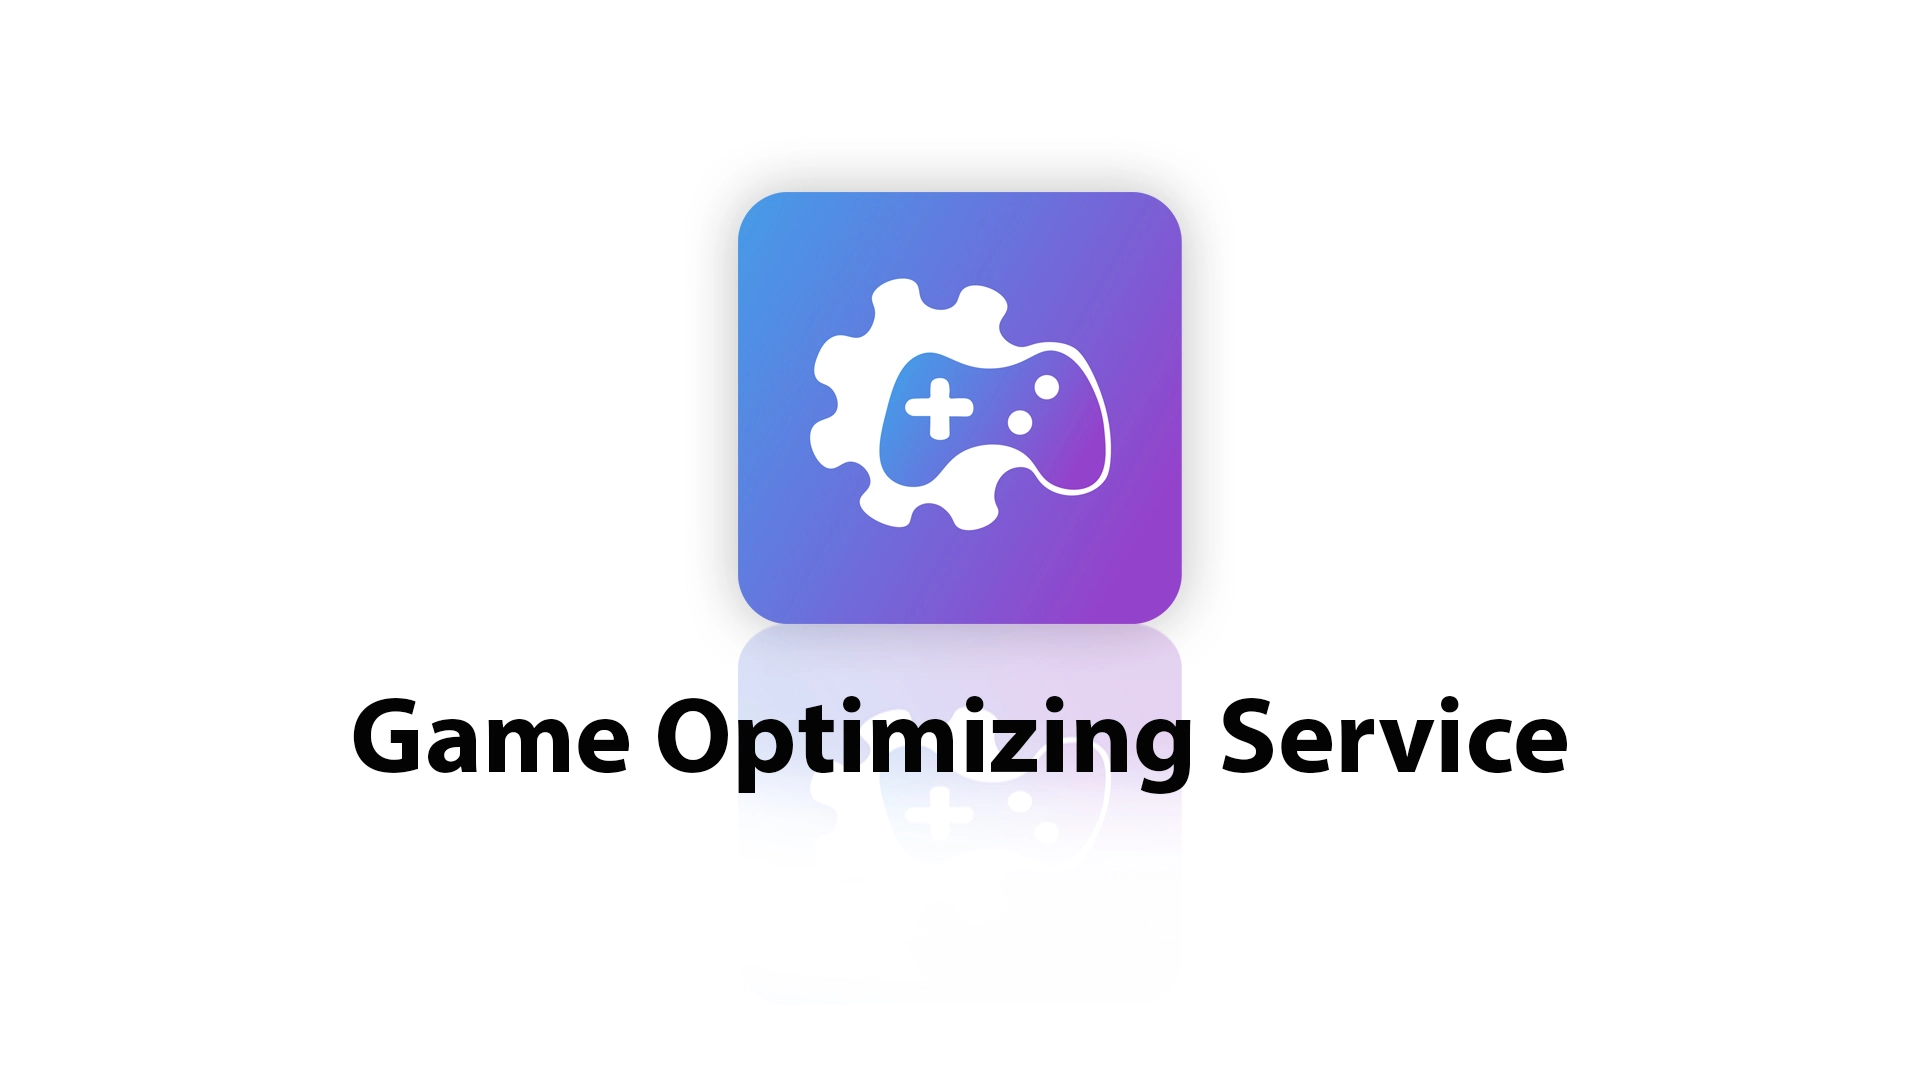 Gaming optimizing service. Samsung game optimizing service.